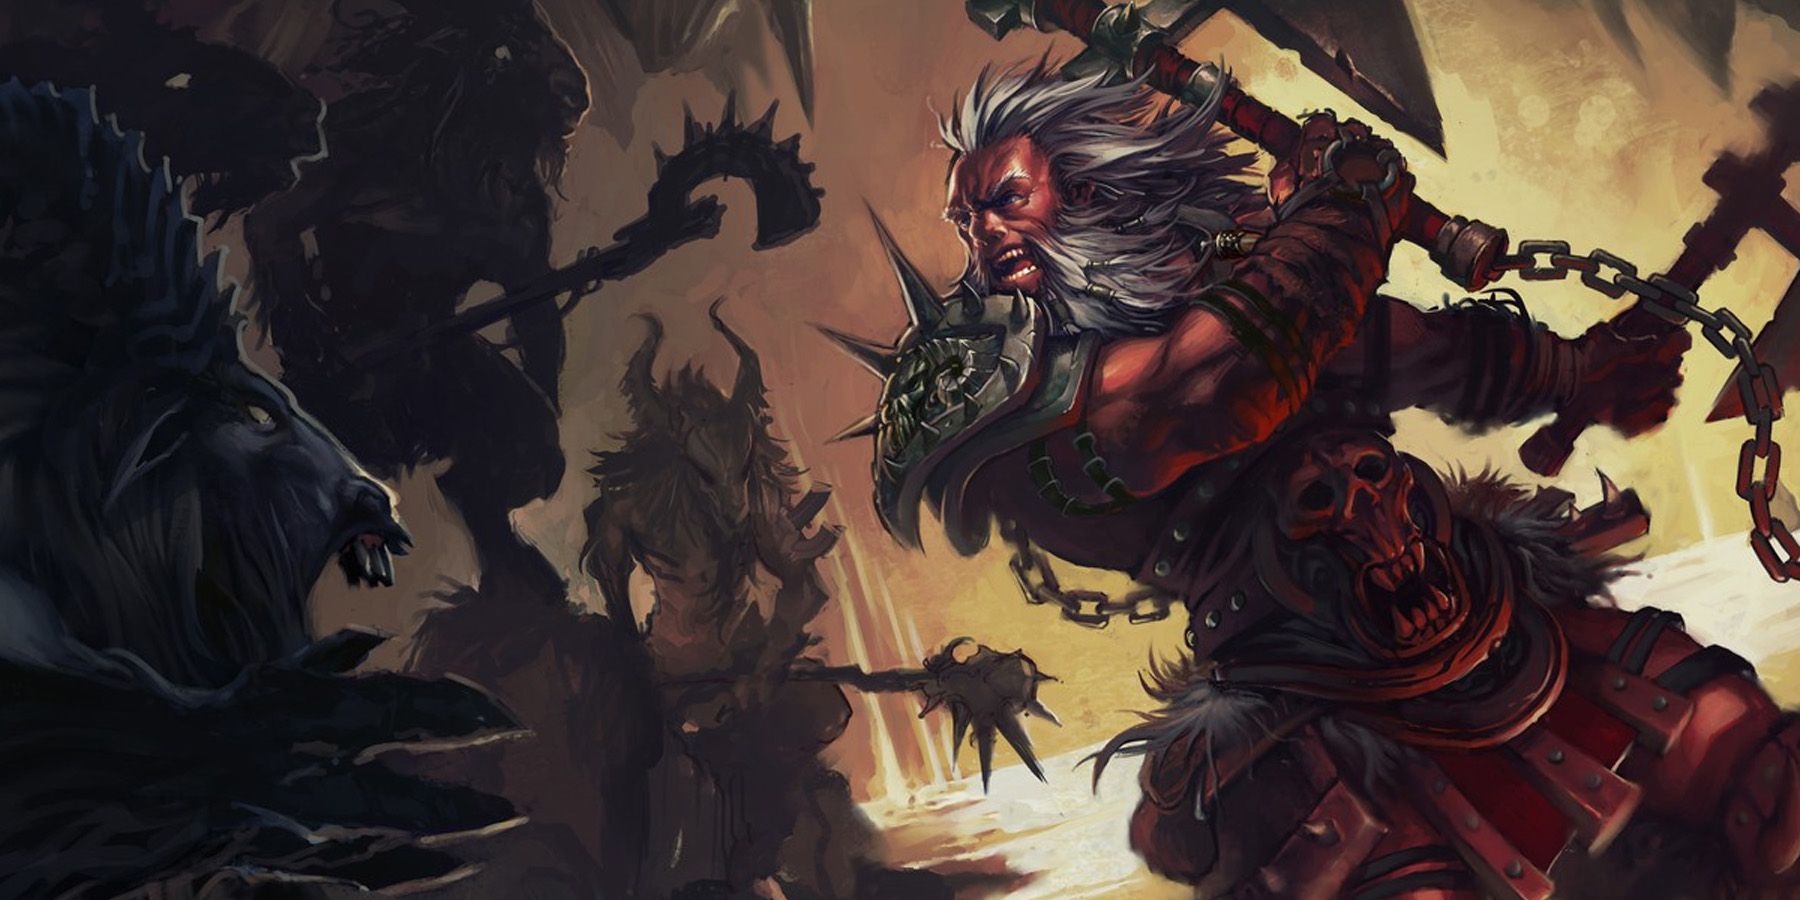 Diablo 3 Artwork Of A Barbarian In Combat